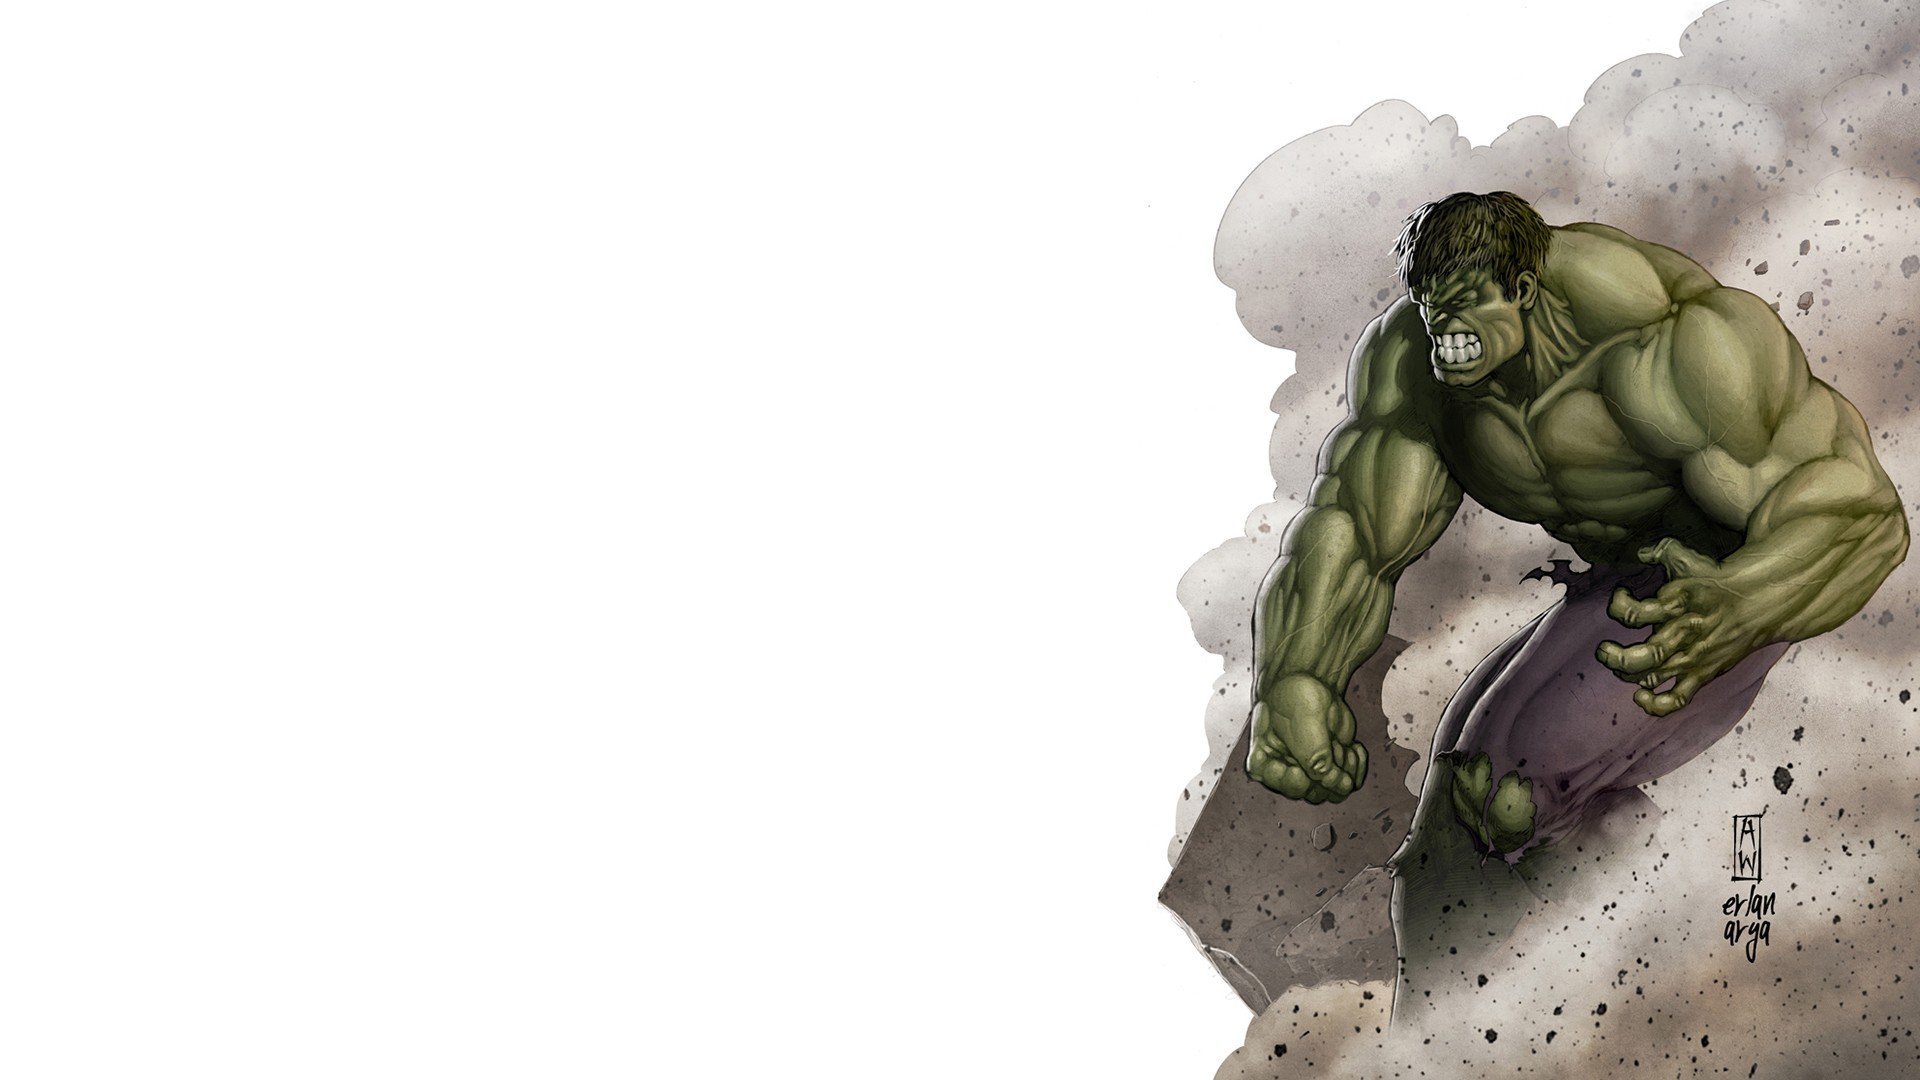 Hulk Marvel Comics Angry - Hulk Cartoon Fond D Écran - 1920x1080 Wallpaper  